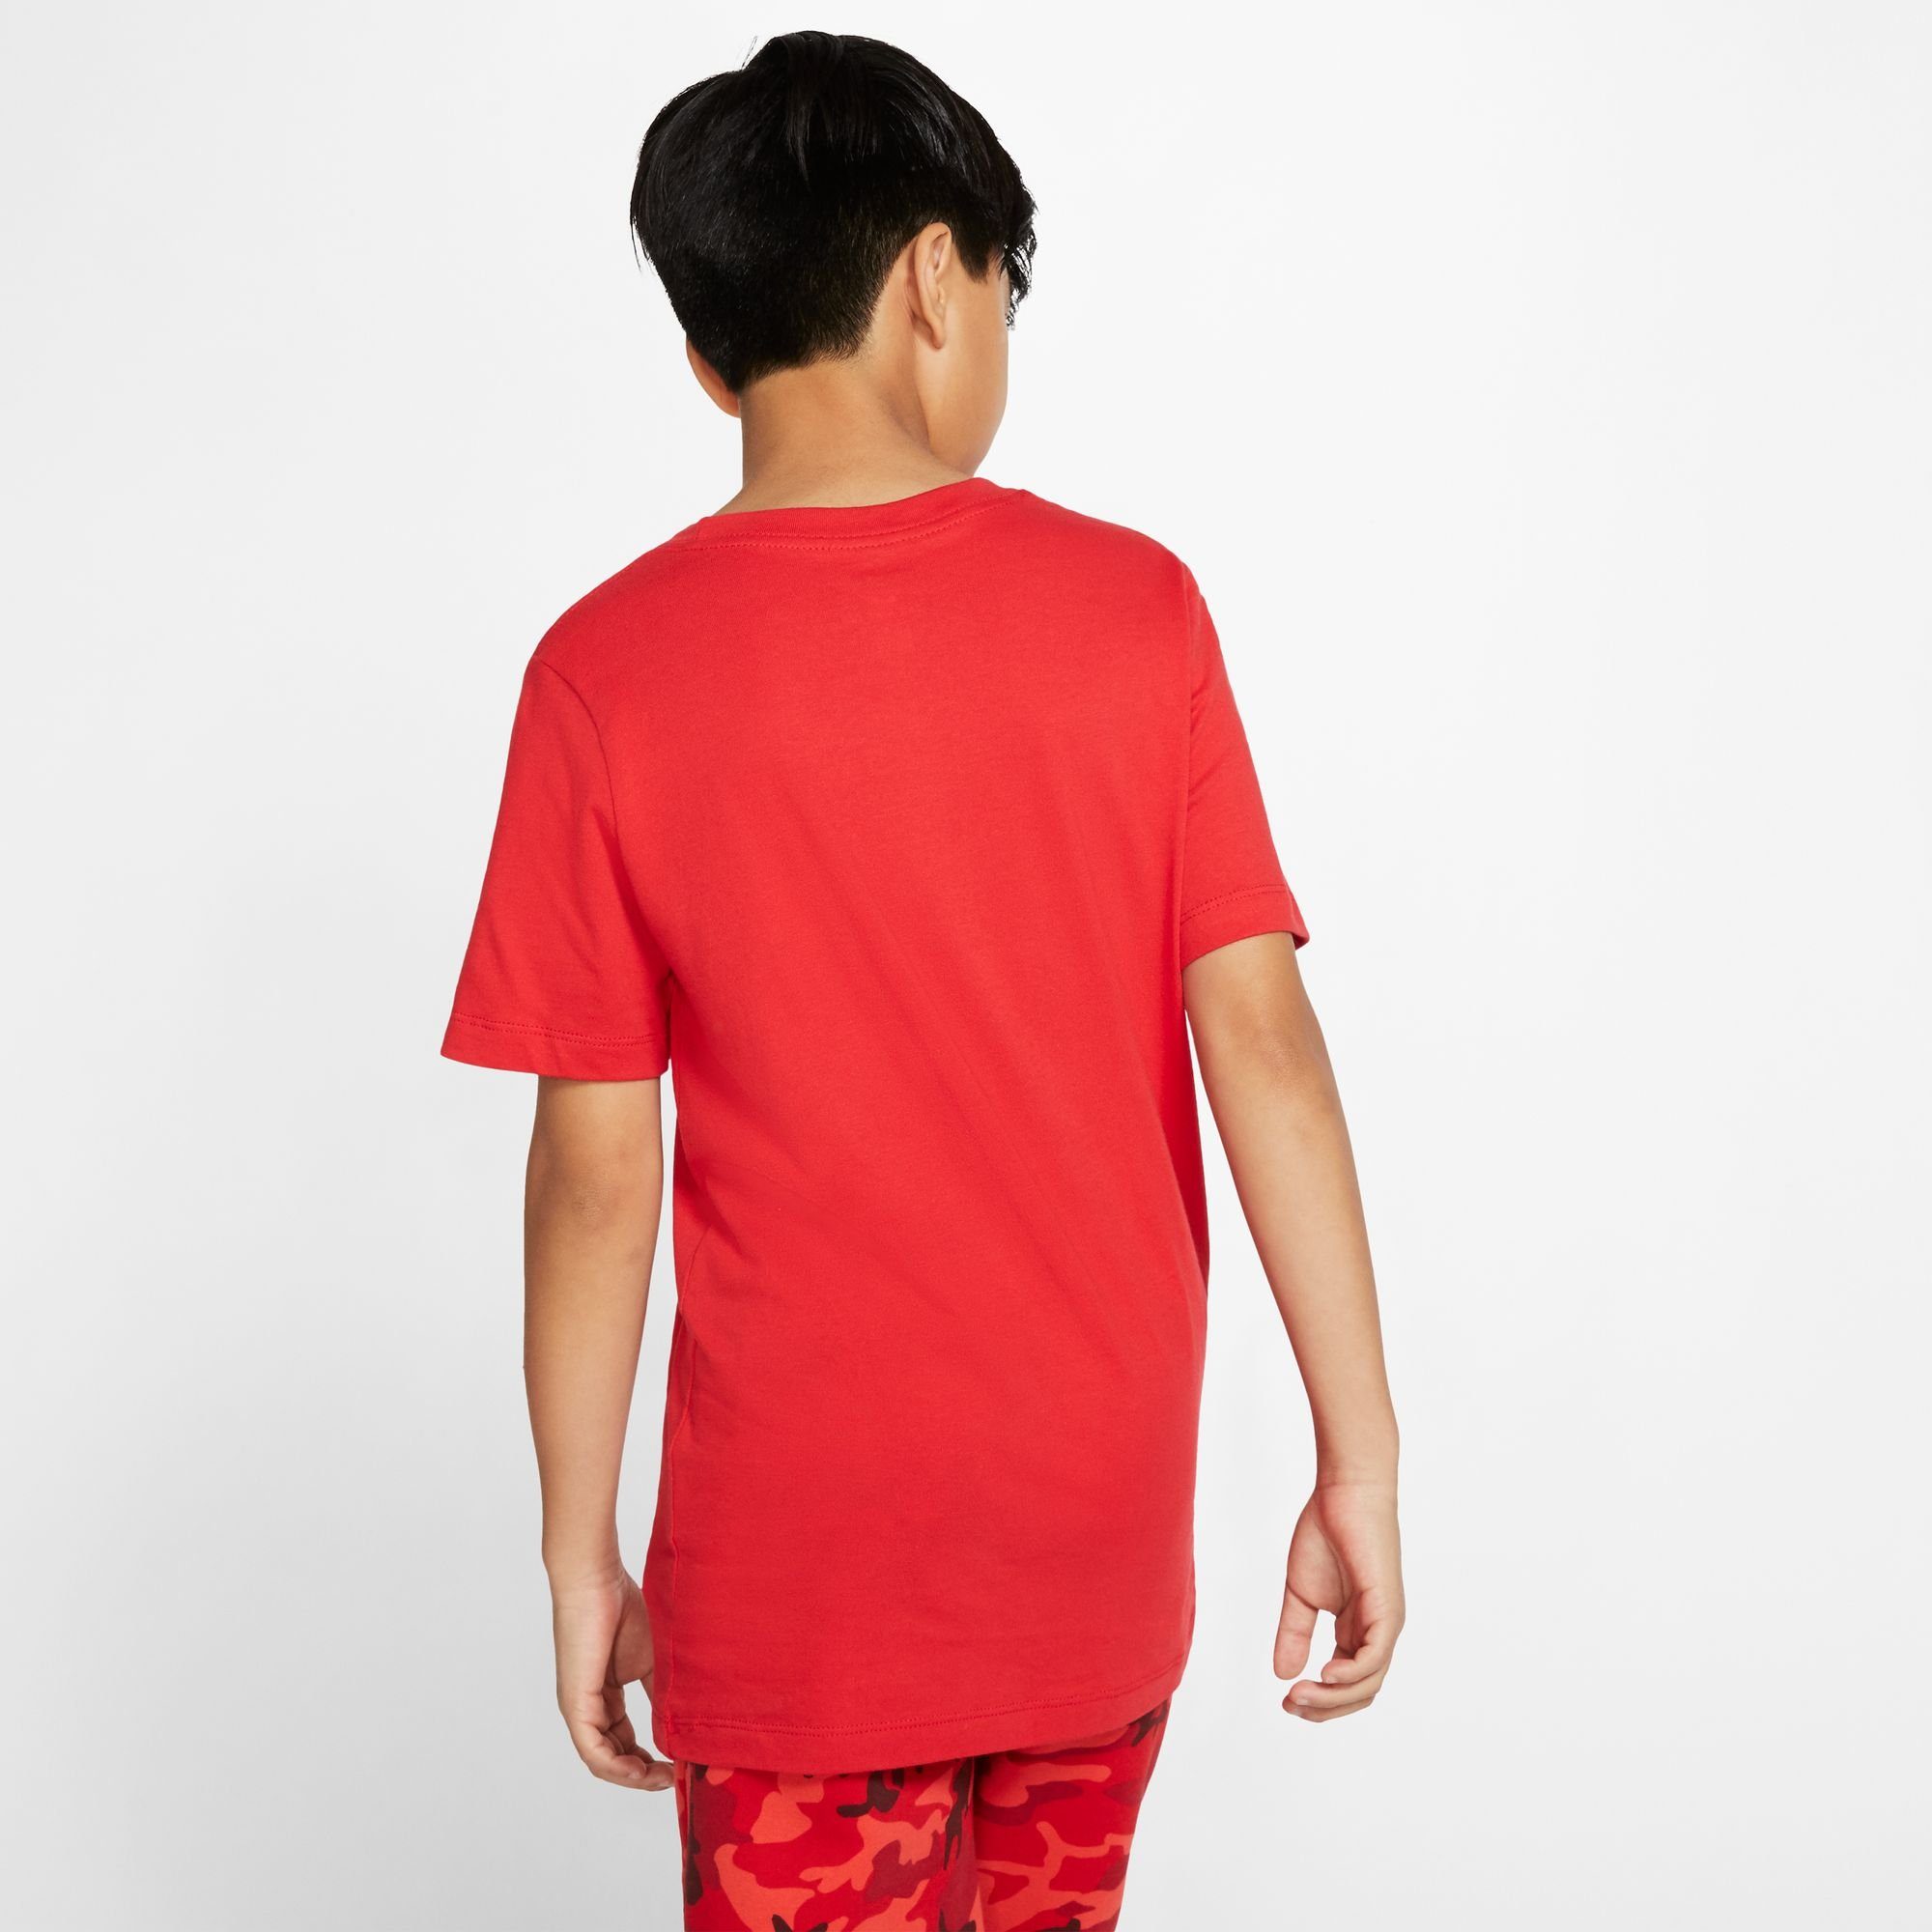 T-SHIRT Sportswear BIG KIDS' Nike UNIVERSITY RED/WHITE T-Shirt